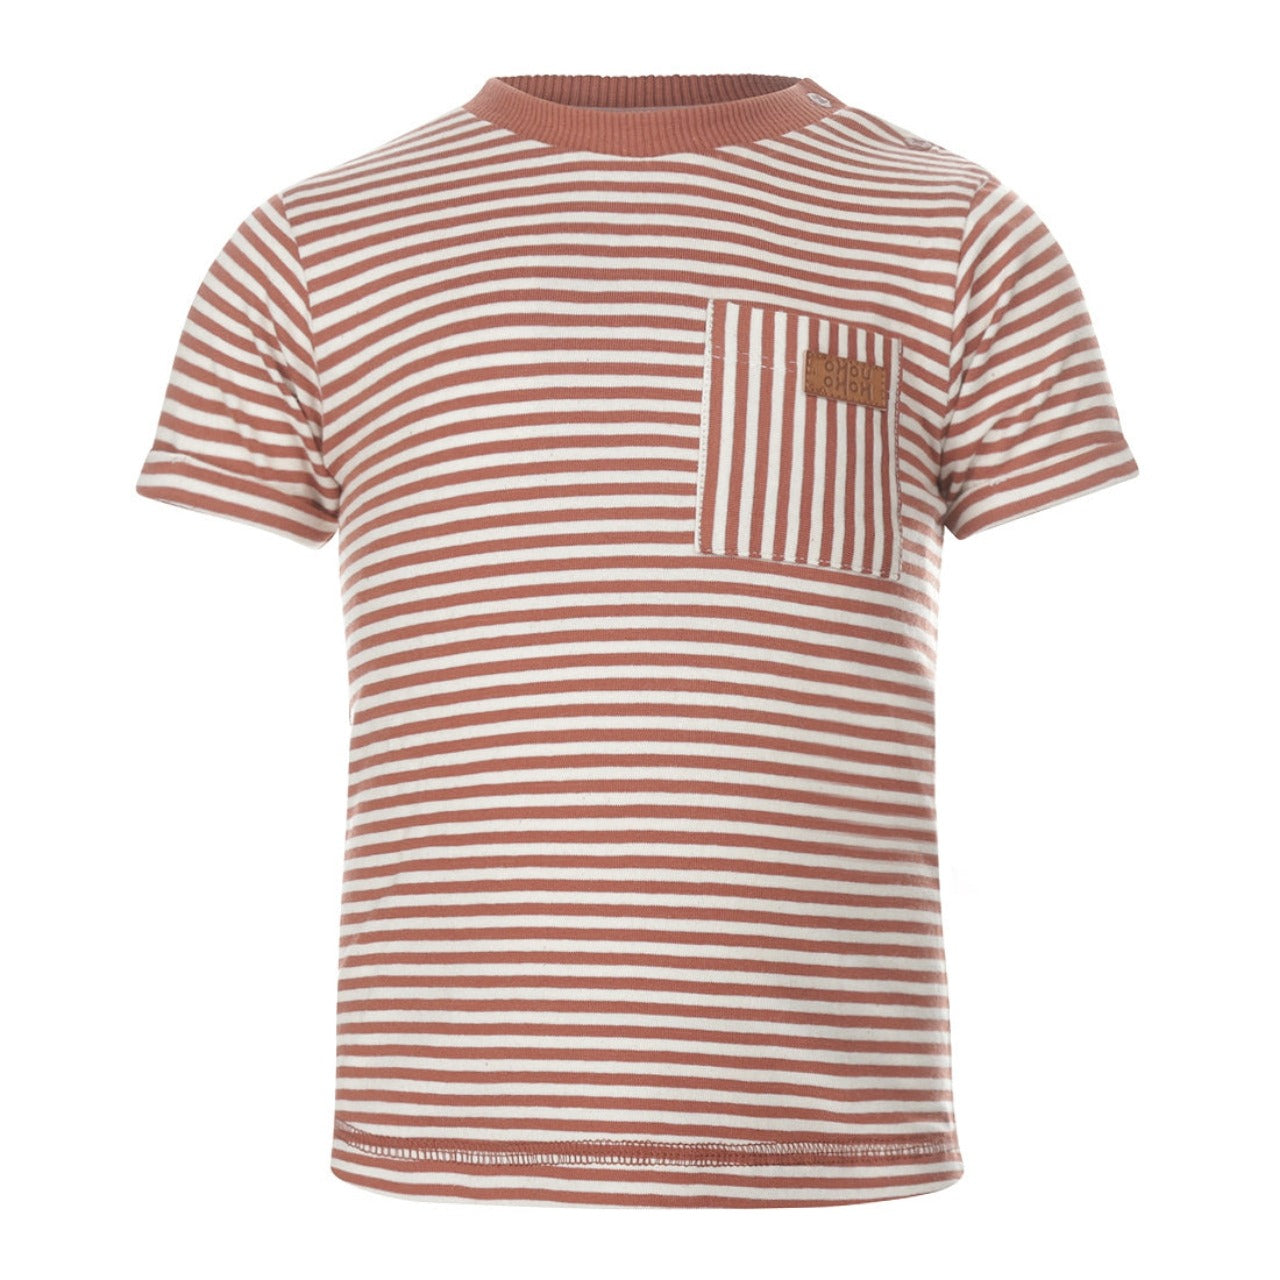 T-shirt Rusty Brown stripes - 6-9 months